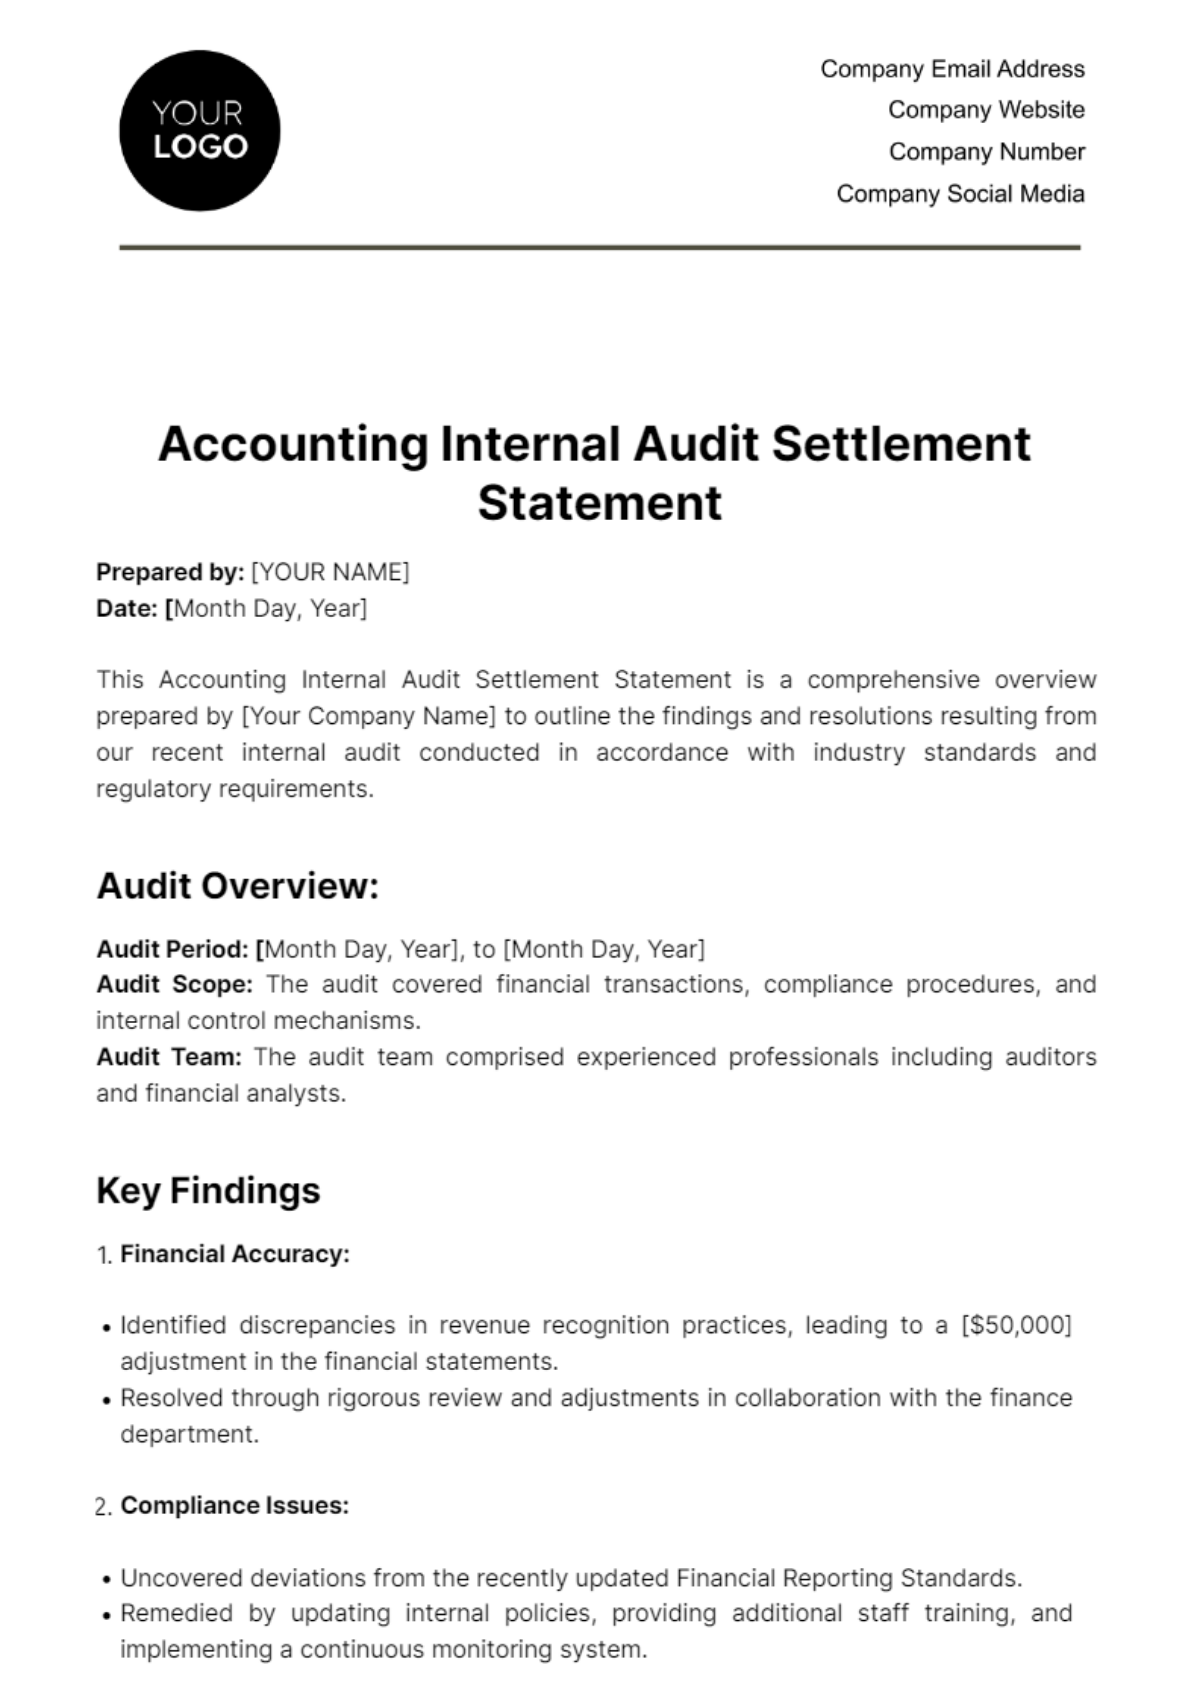 Accounting Internal Audit Settlement Statement Template